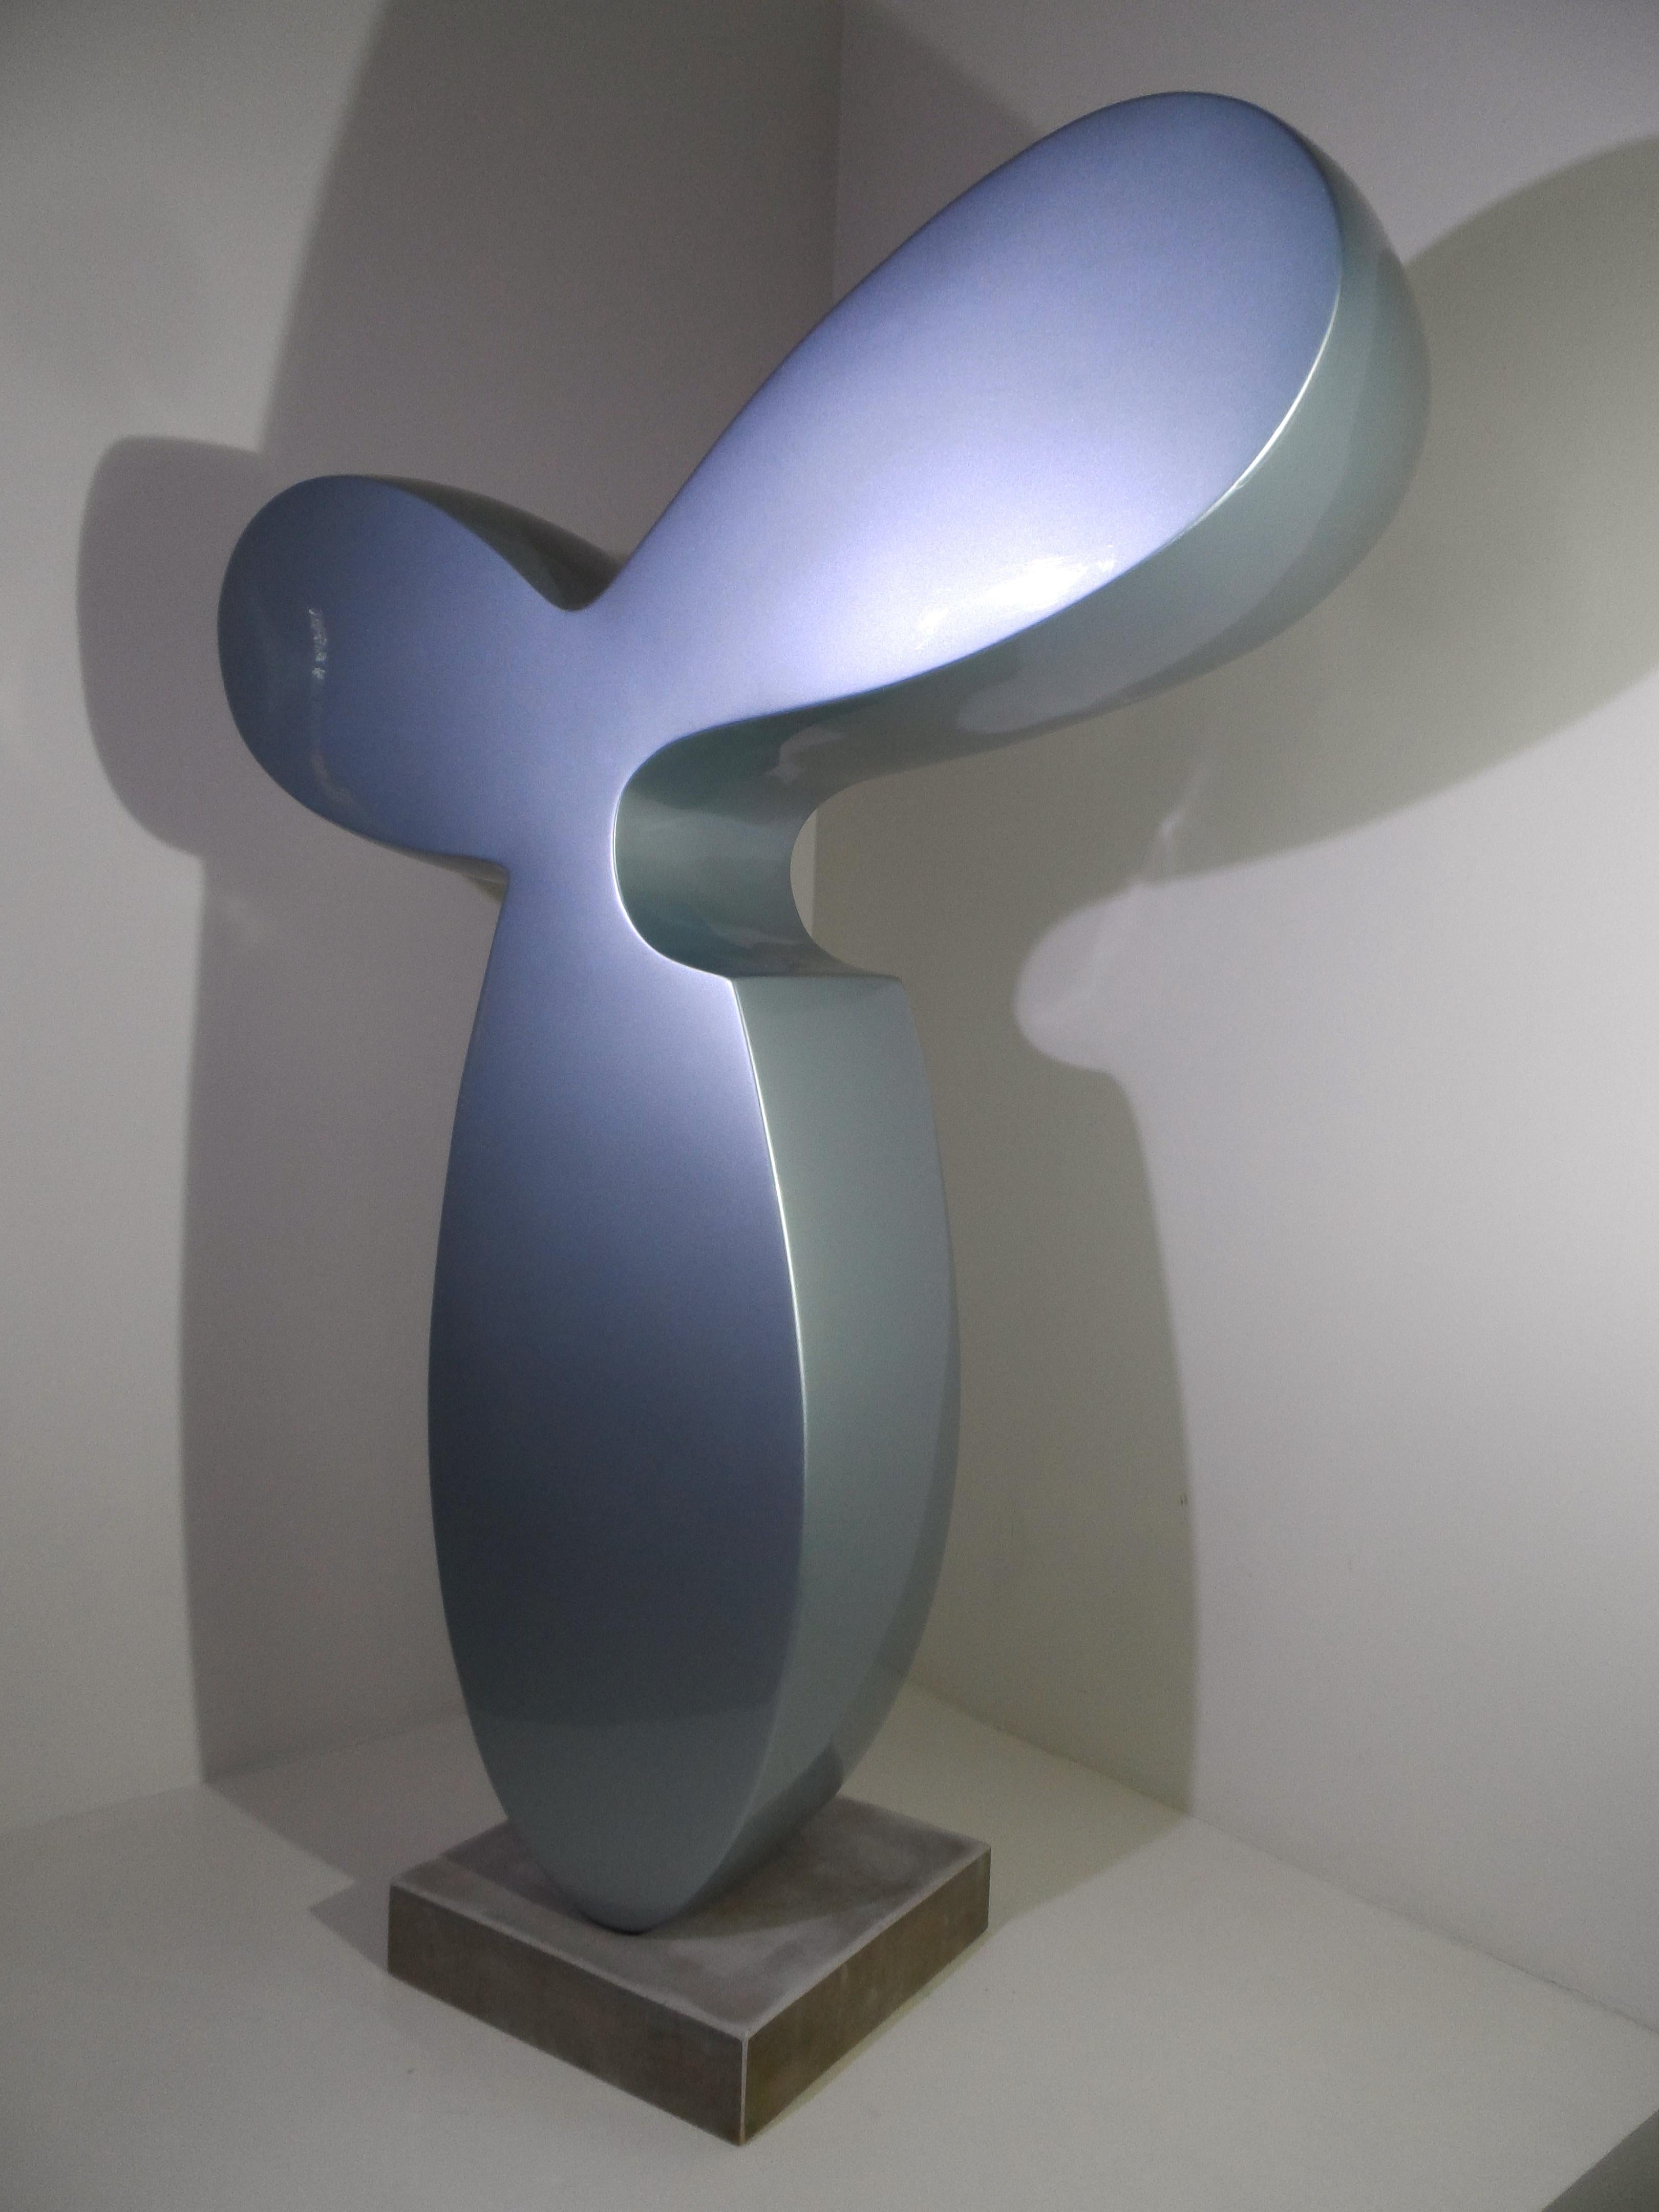 Ralf Schira Abstract Sculpture - Nike - Sculpture, minimalistic, abstract, Contemporary Art, Minimalism, Object